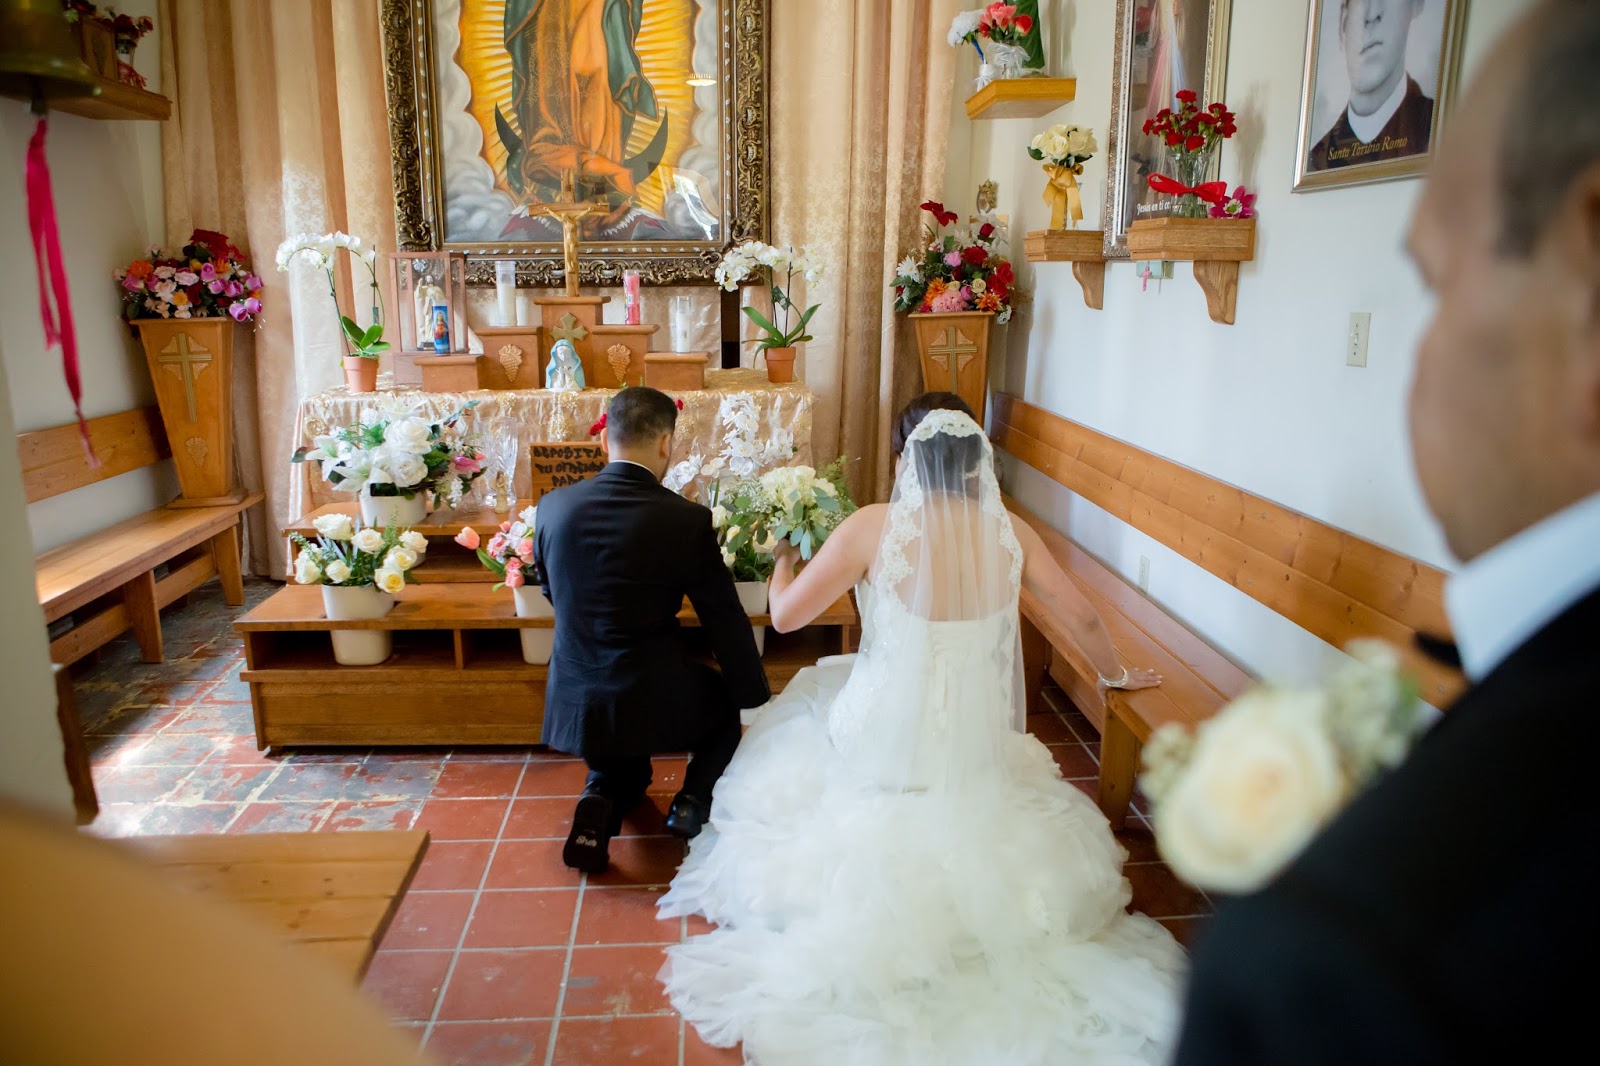 Bride and Groom present flowers to La Virgen de Guadalupe Altar